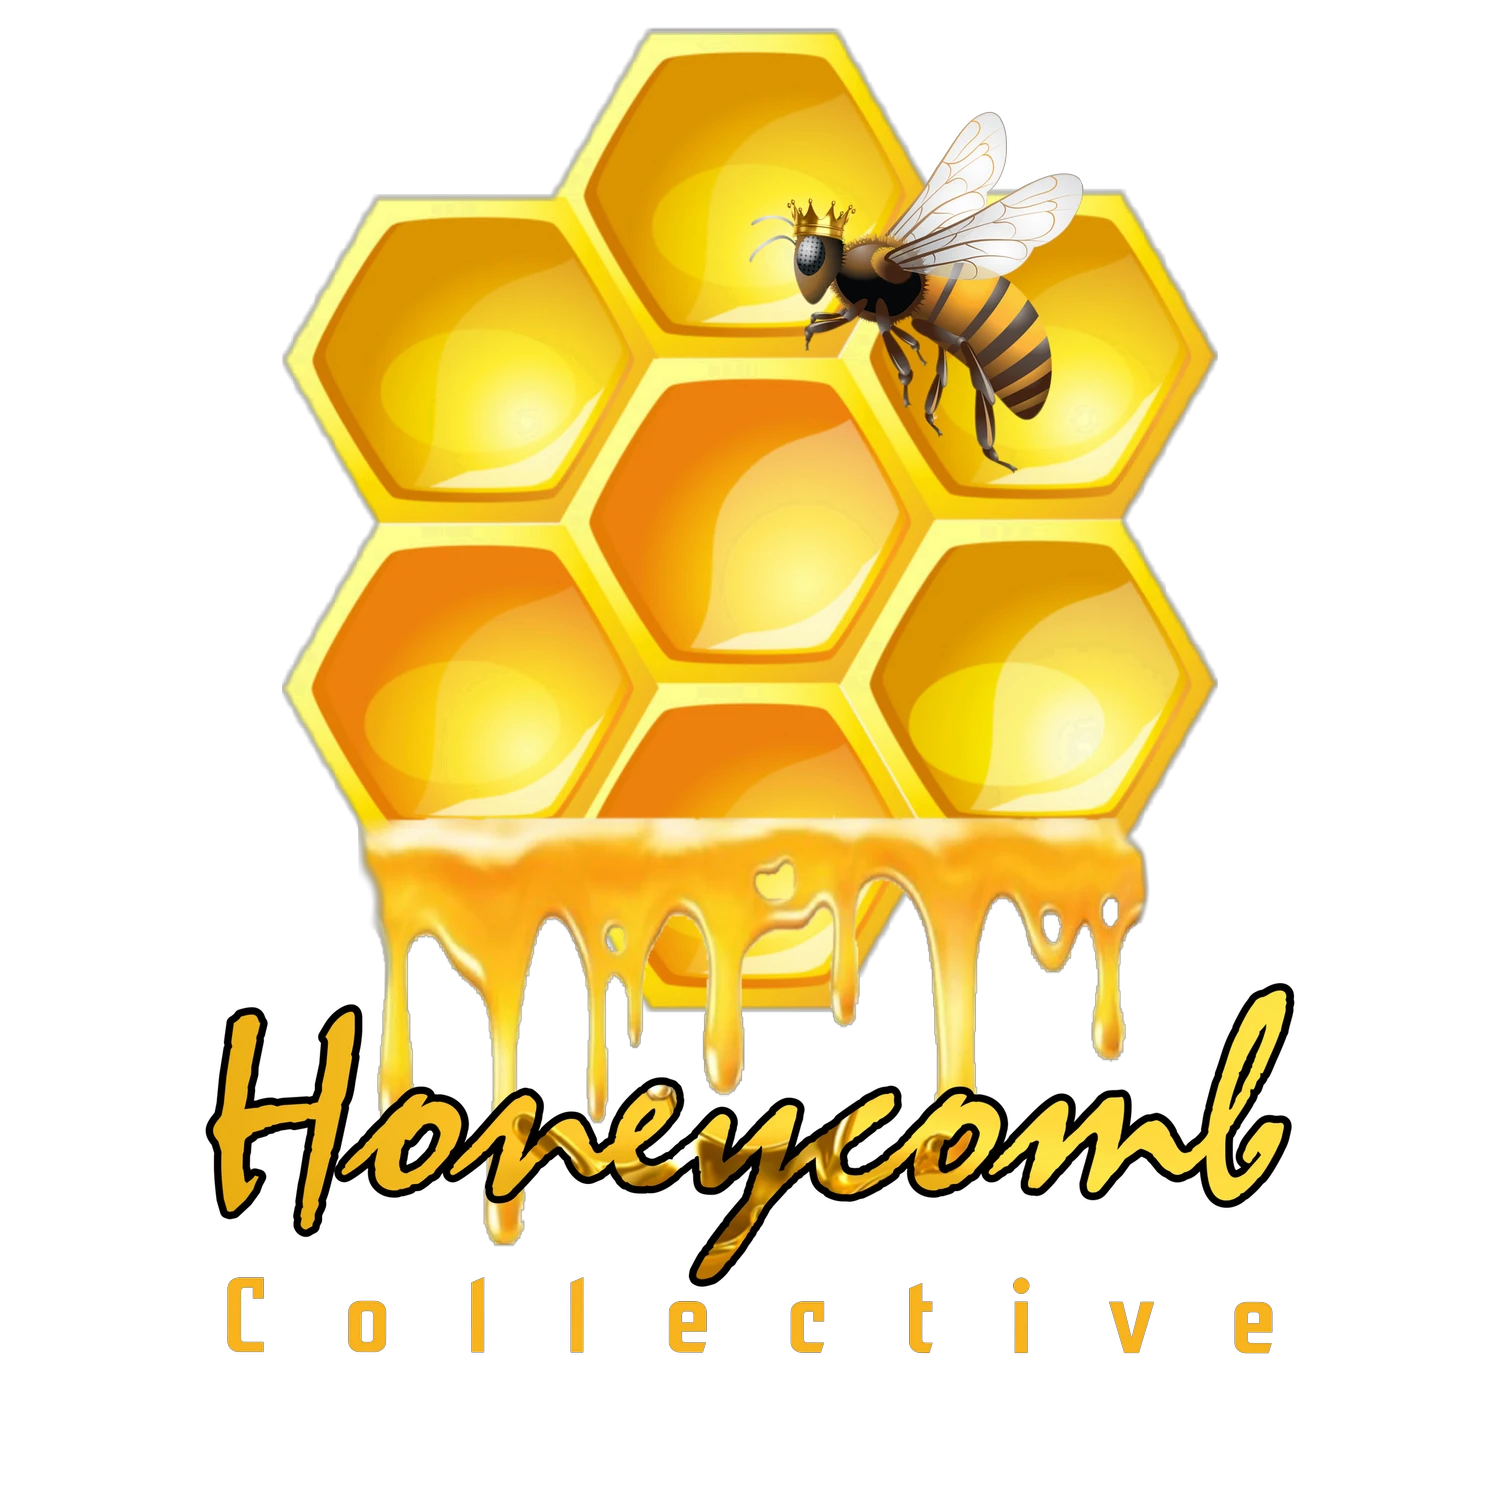 Honeycomb Co promo codes 